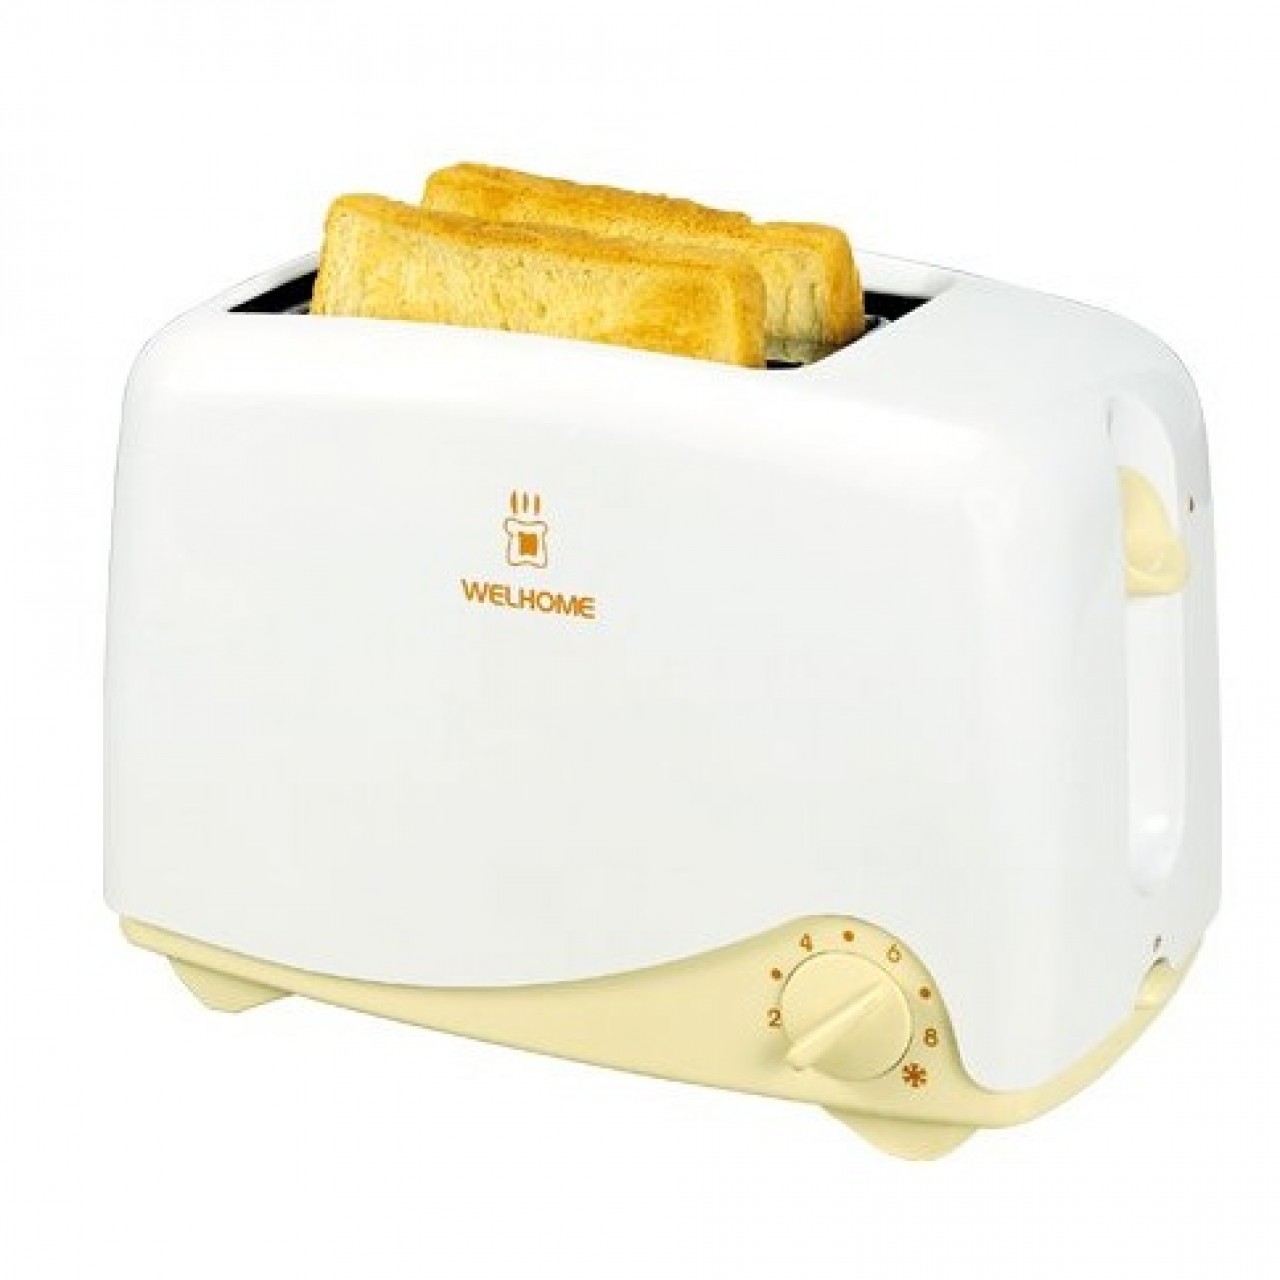 Welhome DK-85A Toaster - Kitchen Appliances